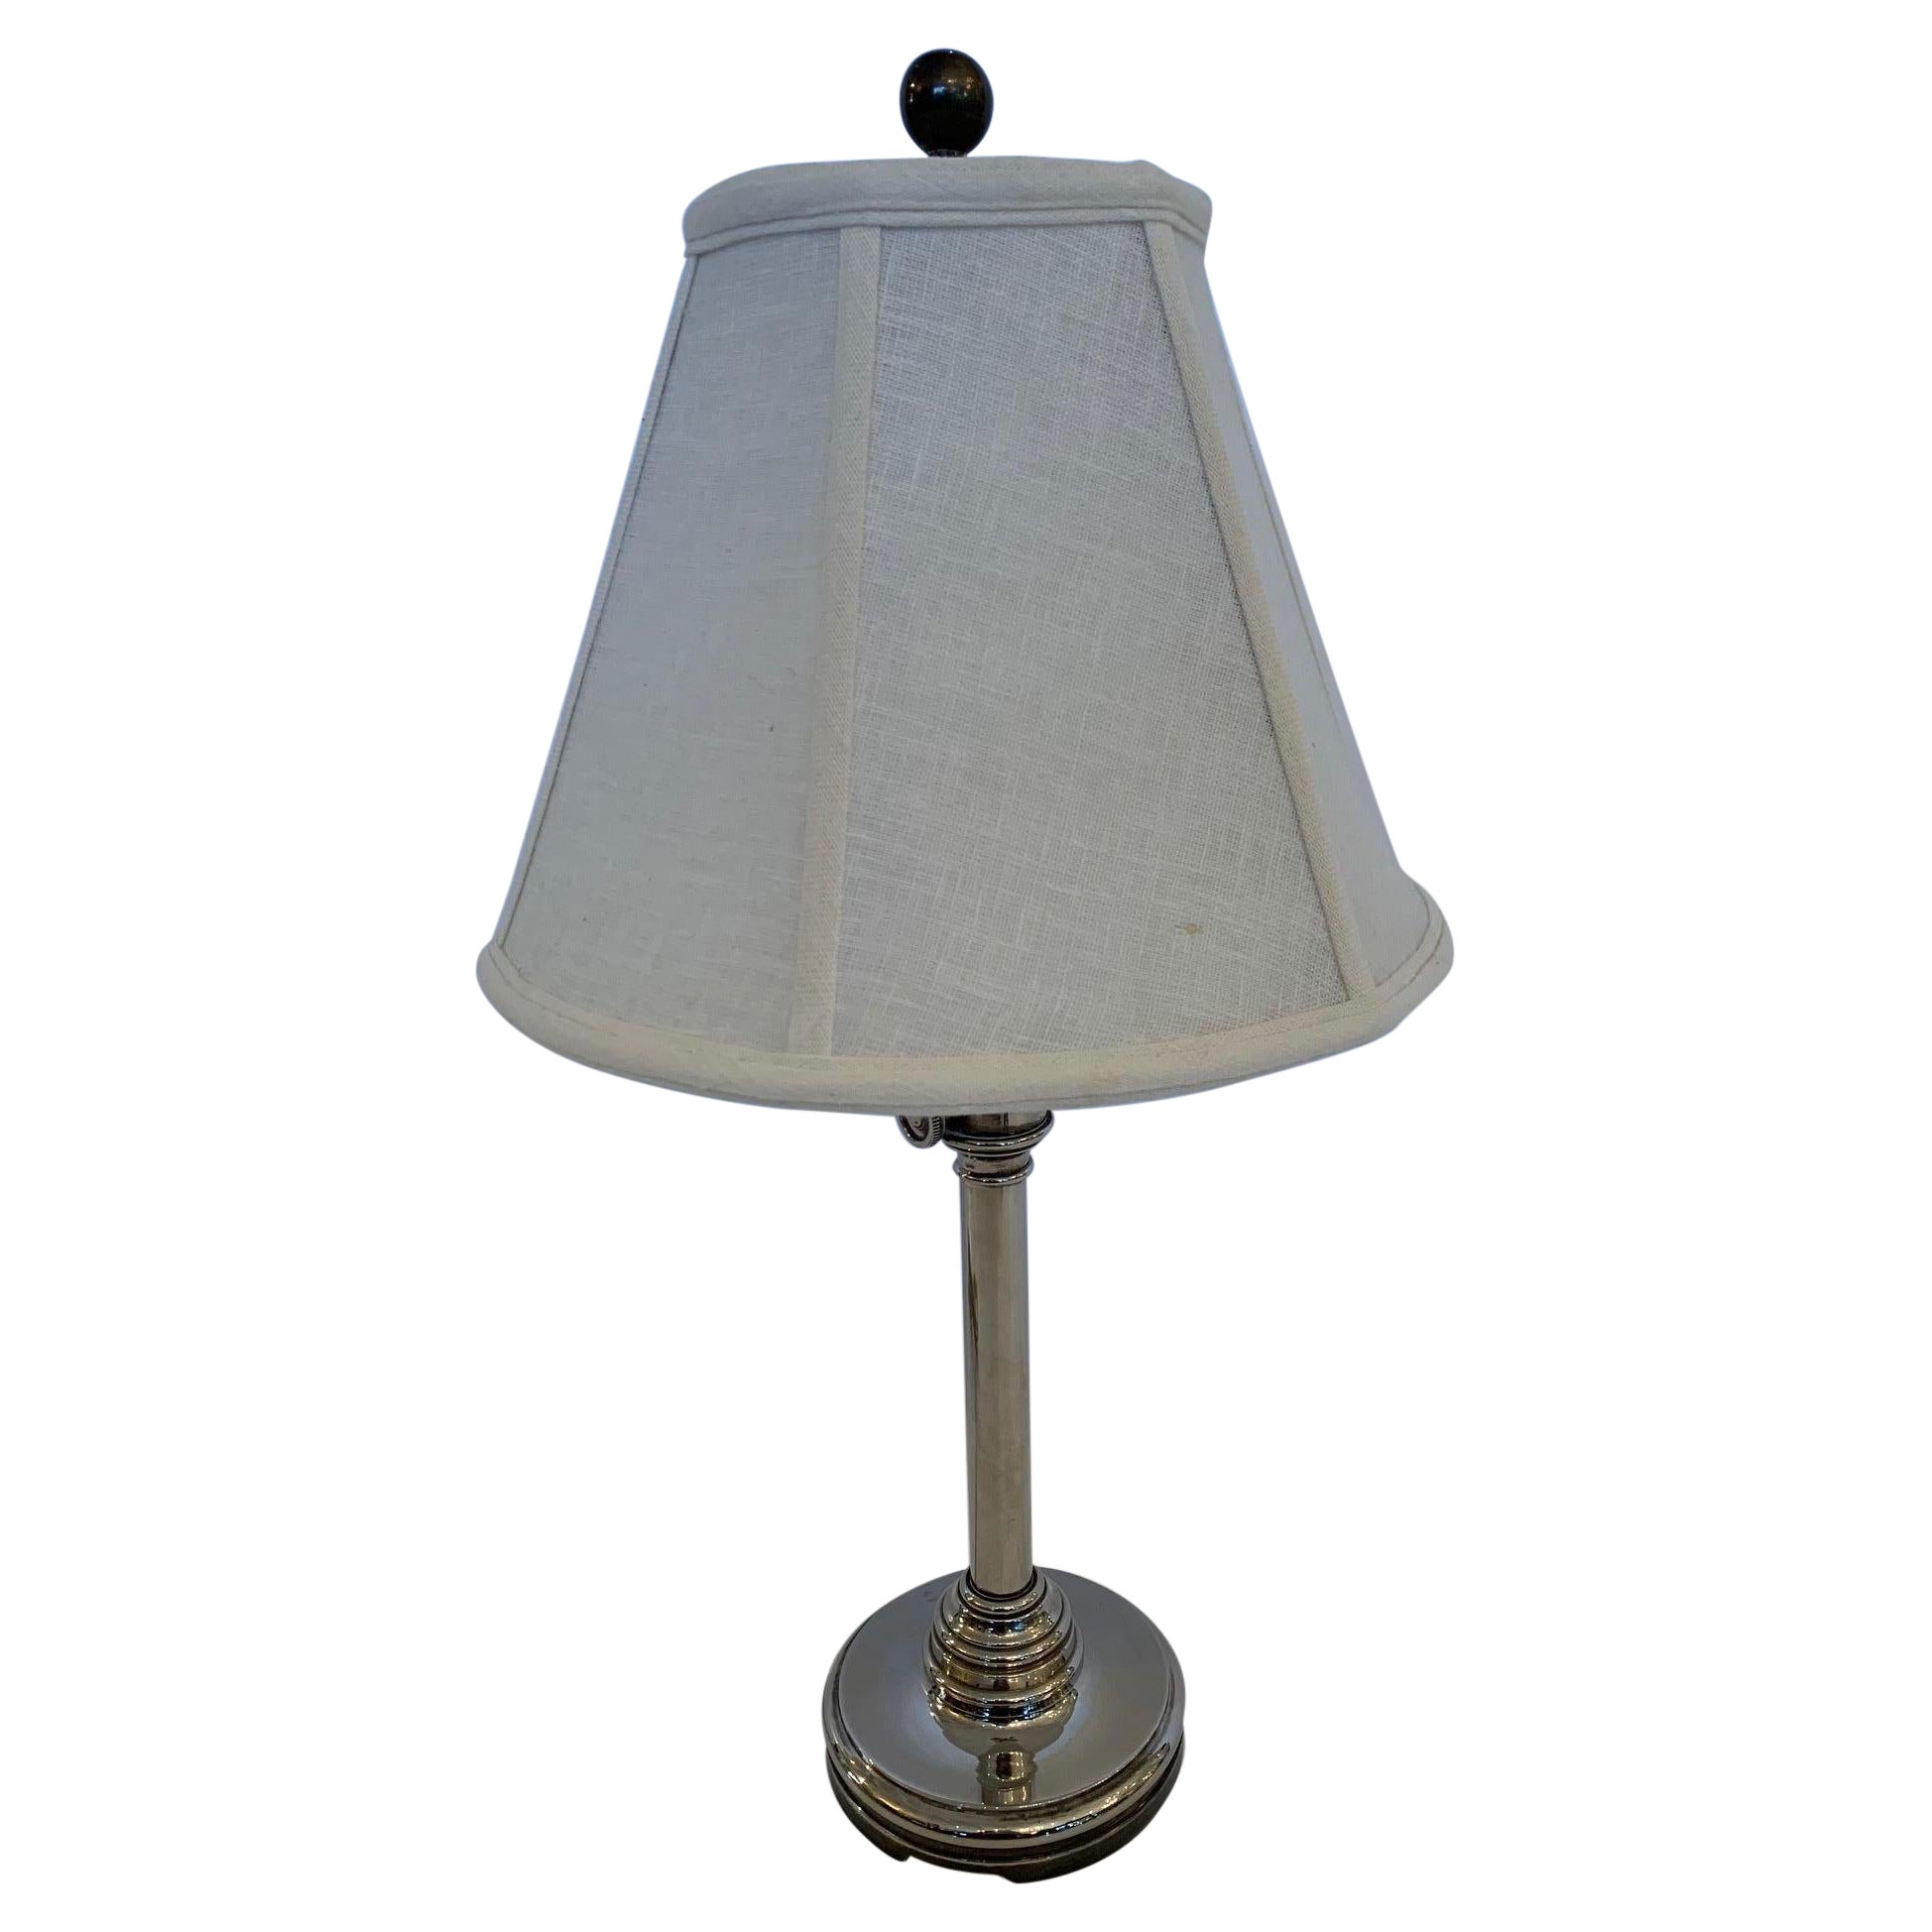 Petite lampe de bureau chromée de style classique en vente